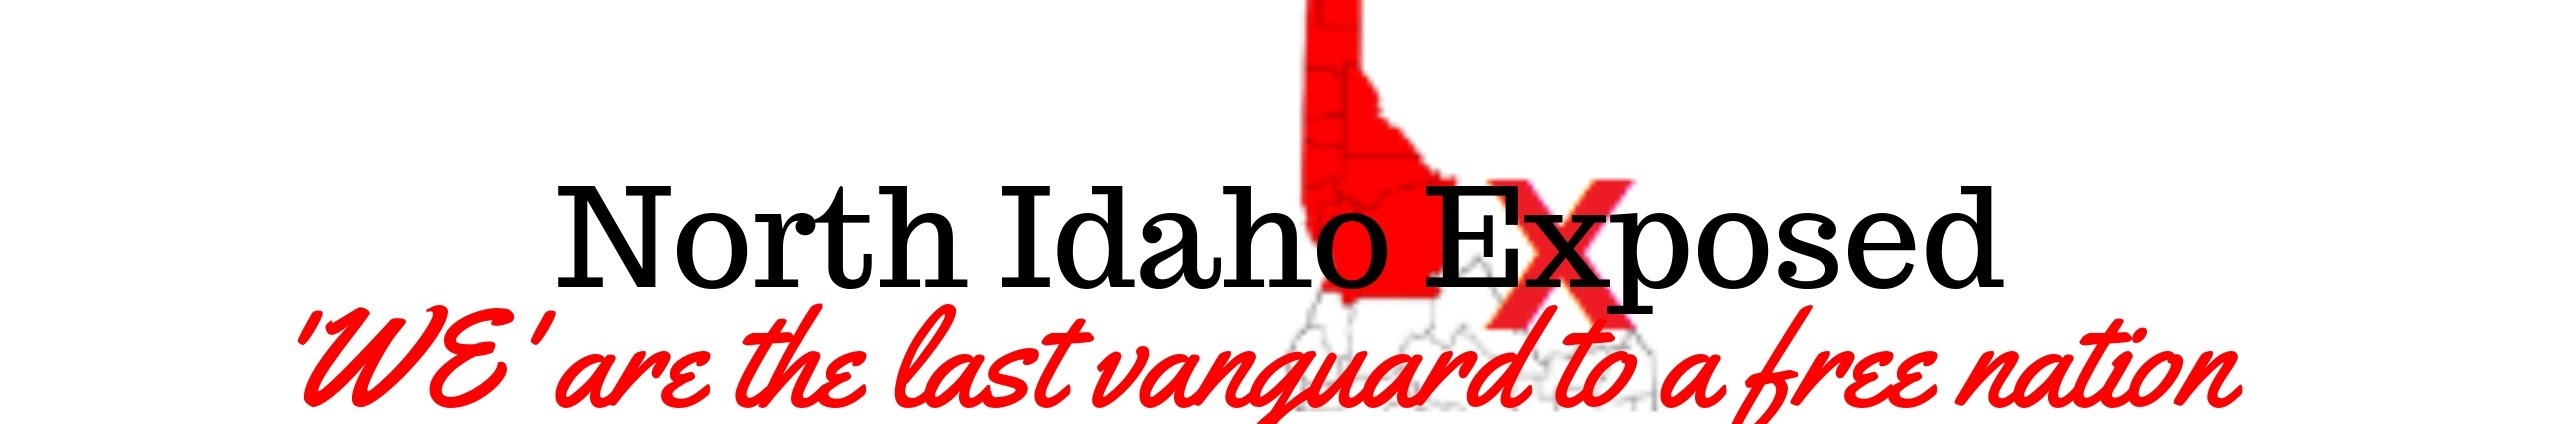 North Idaho Exposed Youtube Page